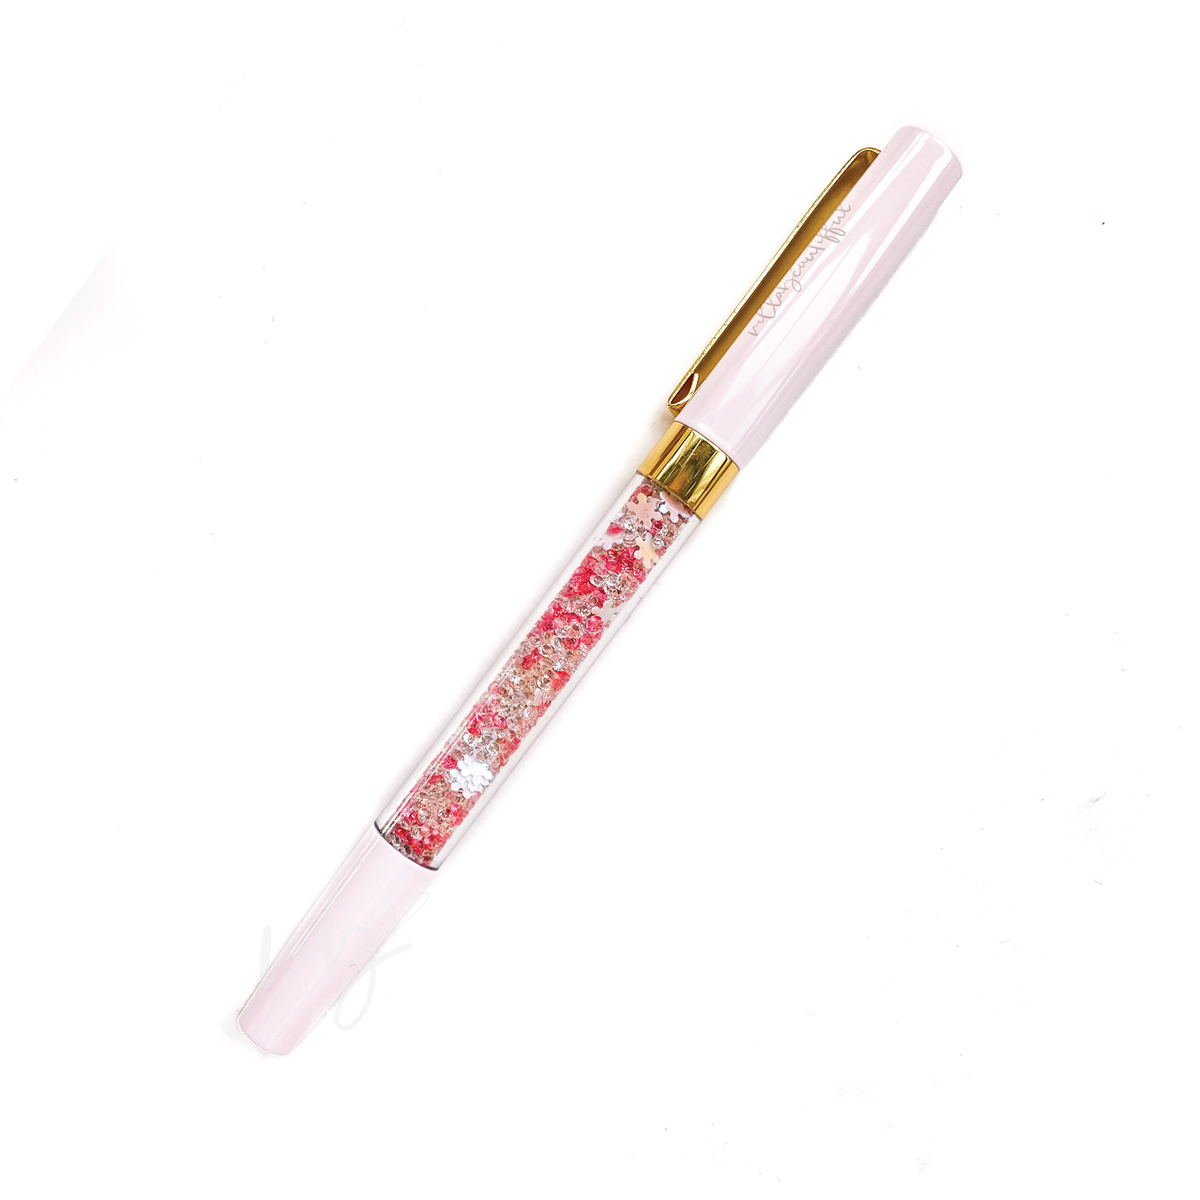 Flurries Imperfect Crystal VBPen | limited kit pen